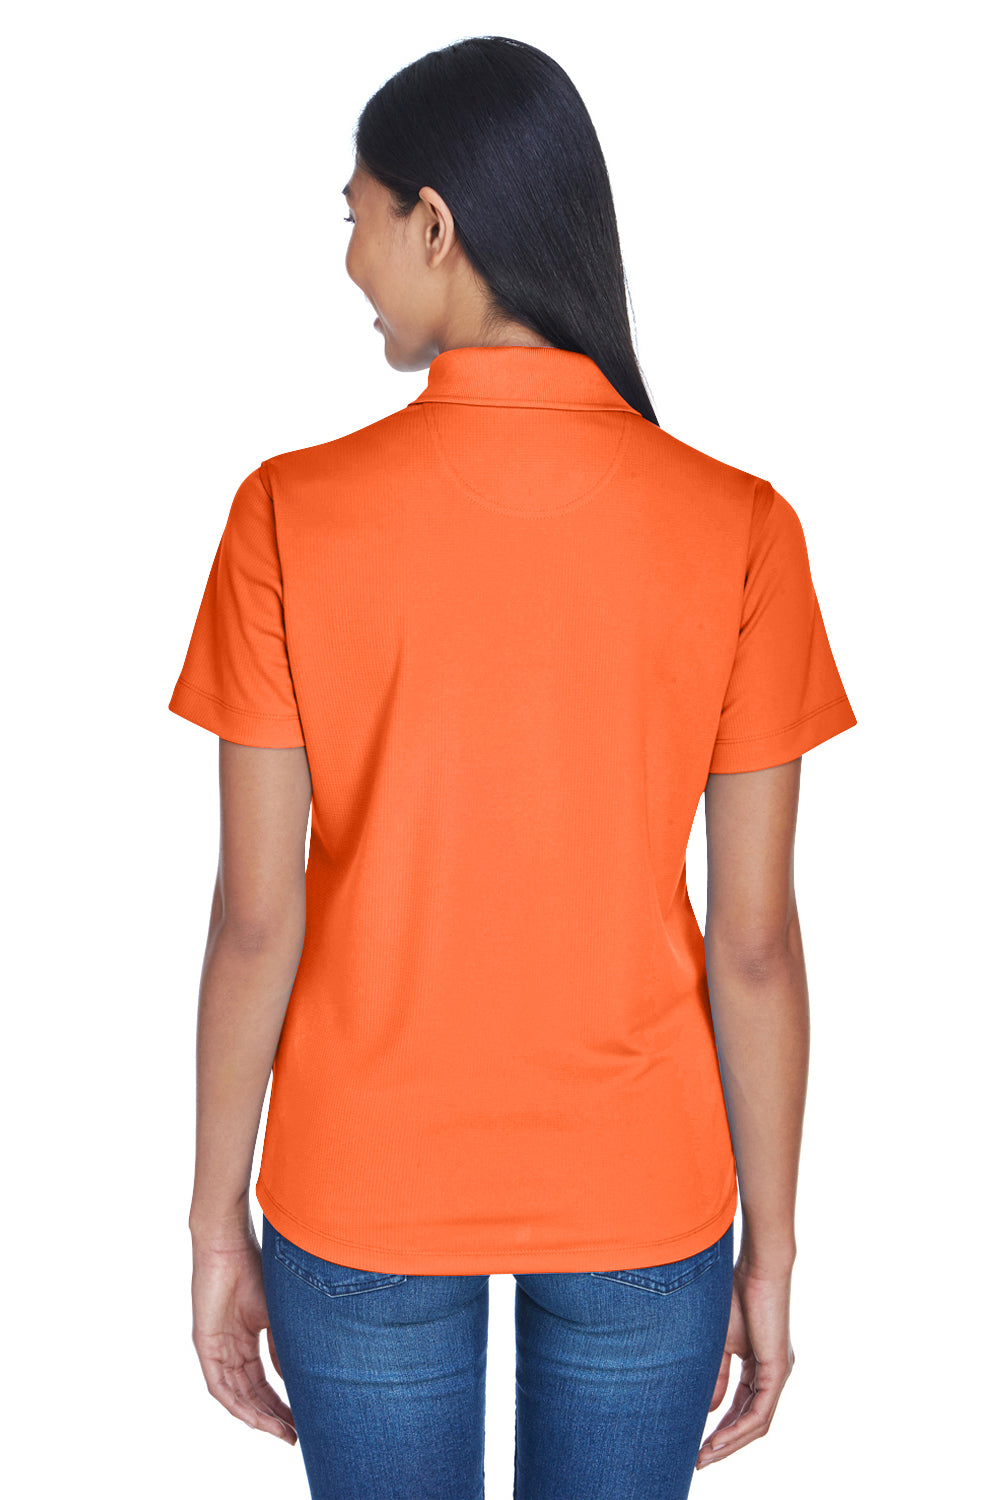 UltraClub 8445L Womens Cool & Dry Performance Moisture Wicking Short Sleeve Polo Shirt Orange Back